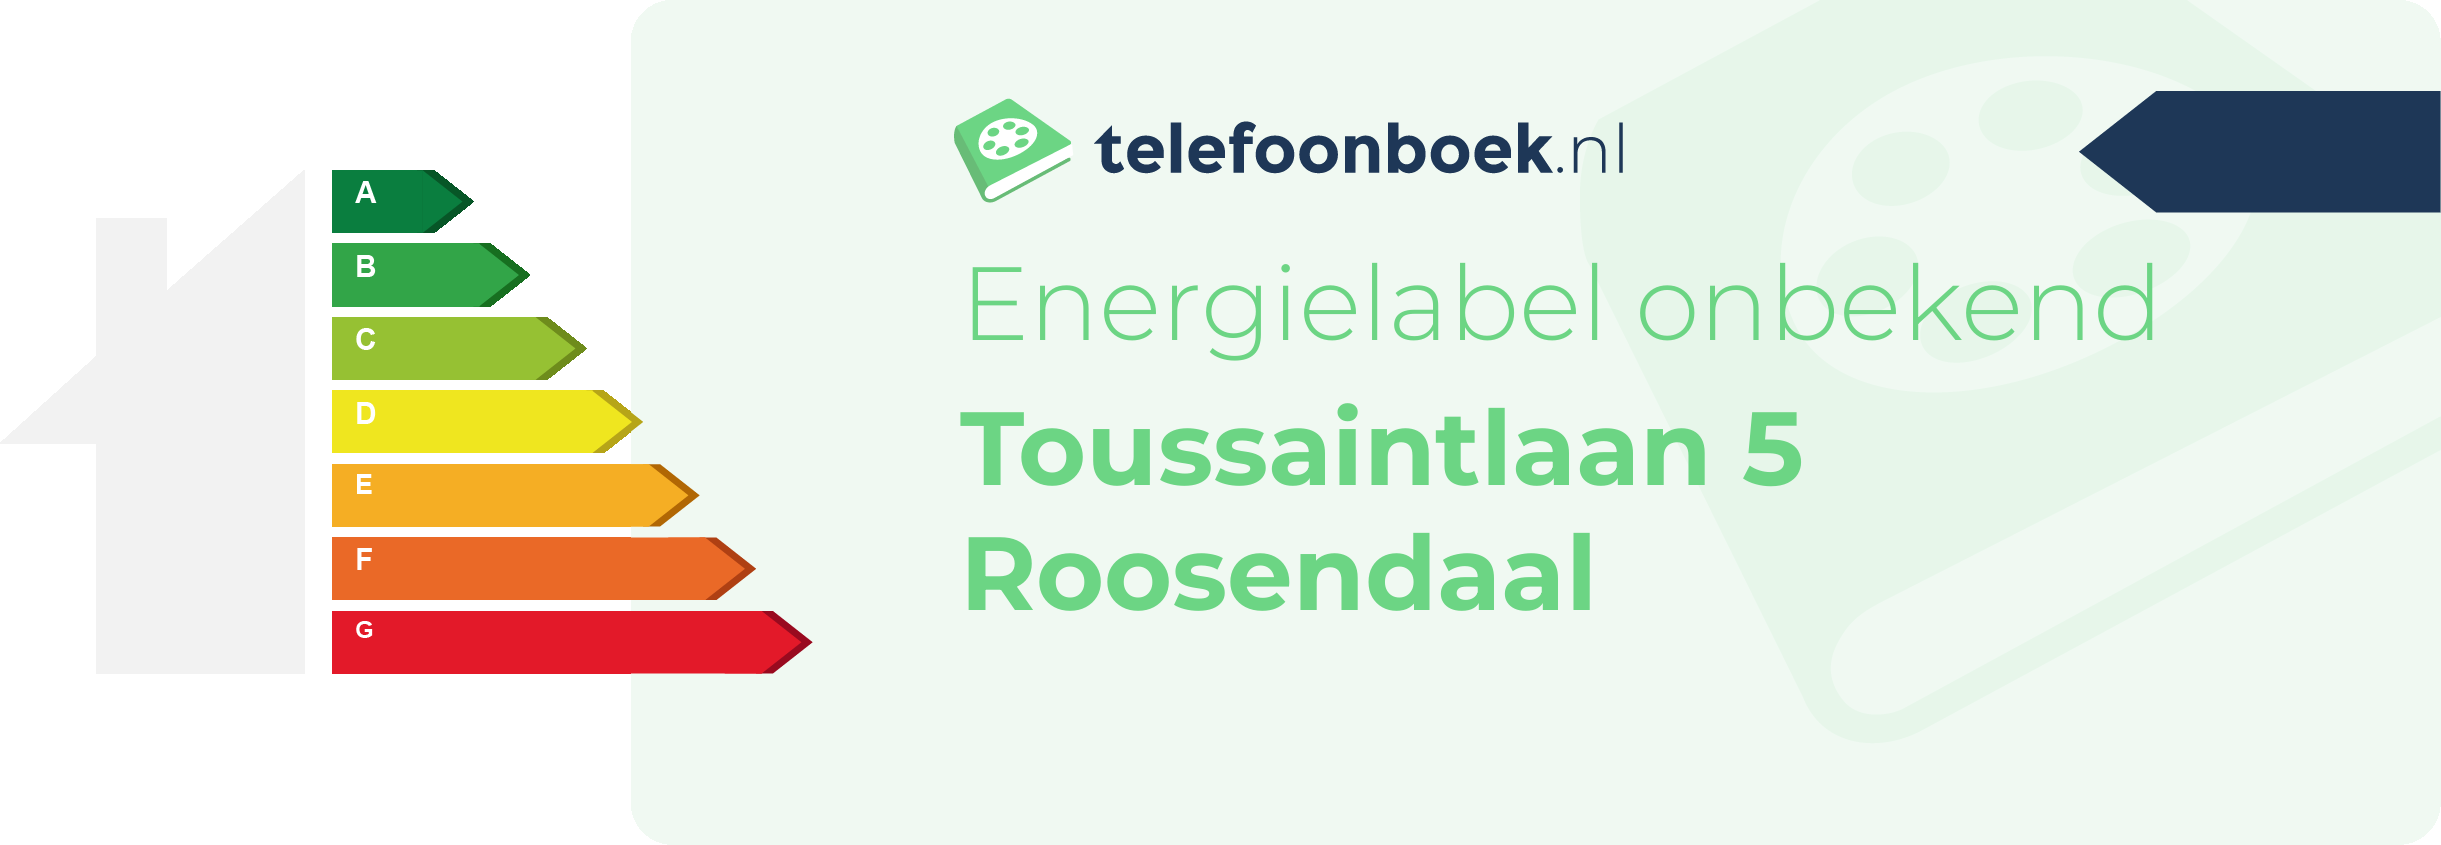 Energielabel Toussaintlaan 5 Roosendaal